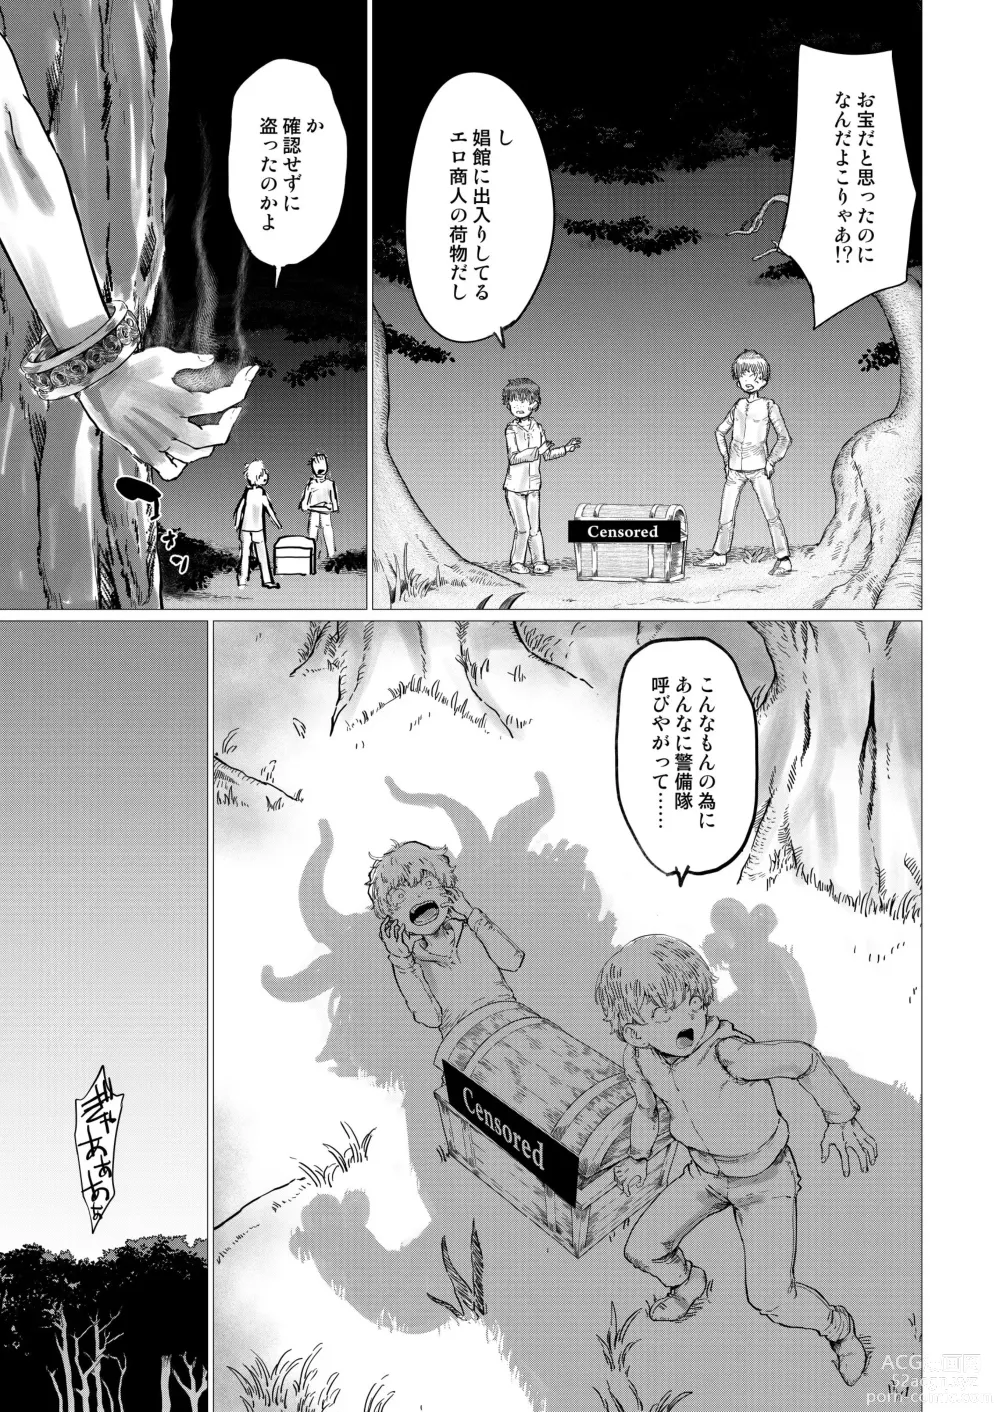 Page 6 of doujinshi Shikorufu